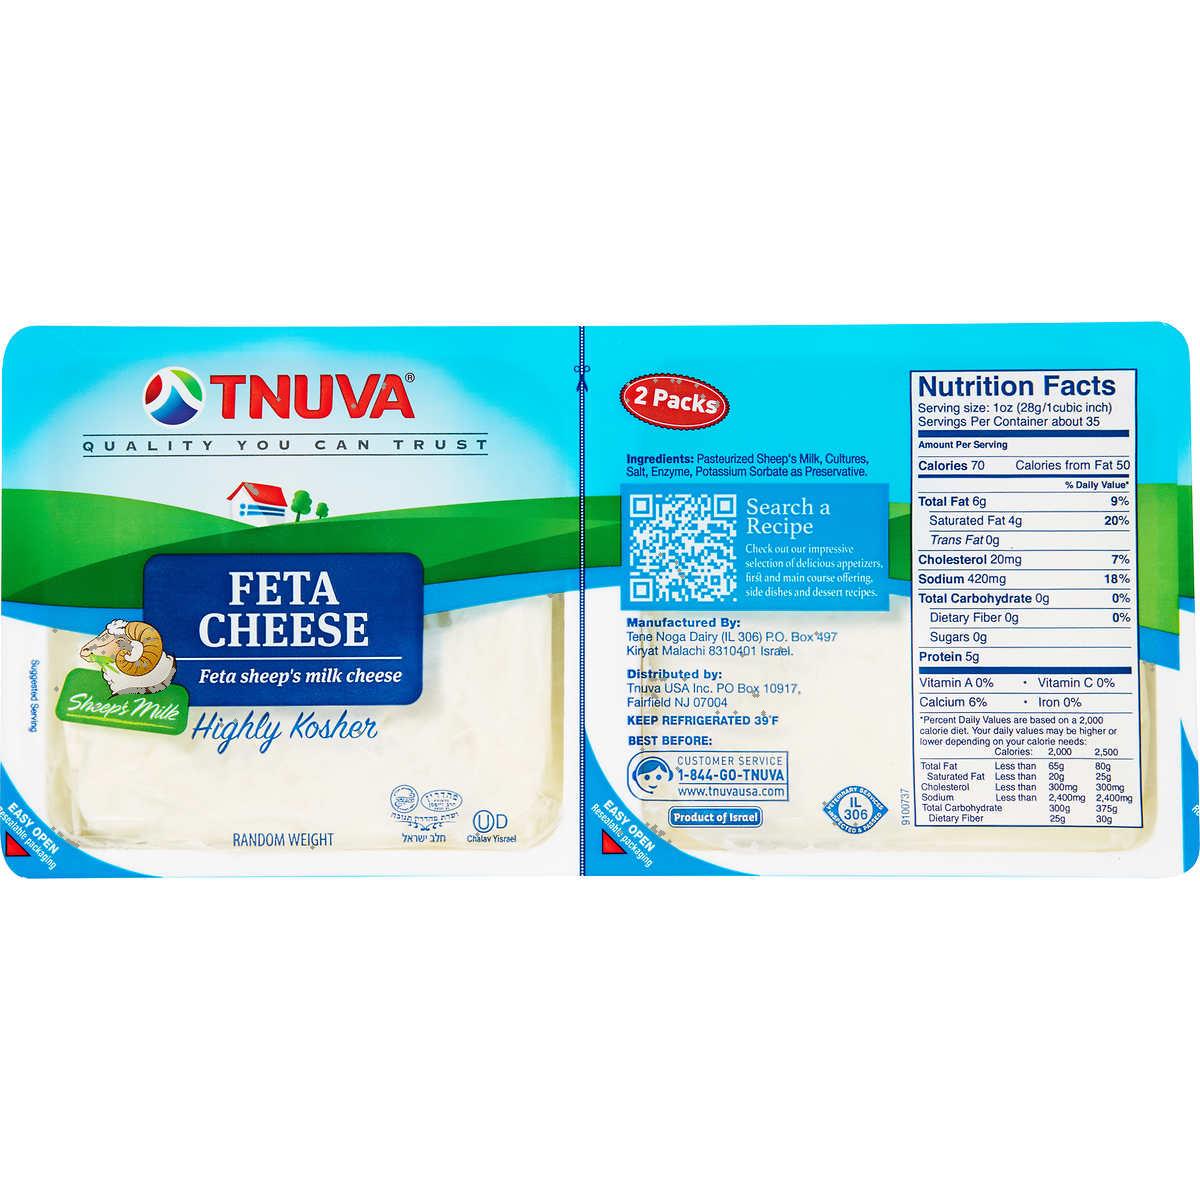 Tnuva Kosher Feta Sheep's Milk Cheese from Israel, 1 lb avg wt